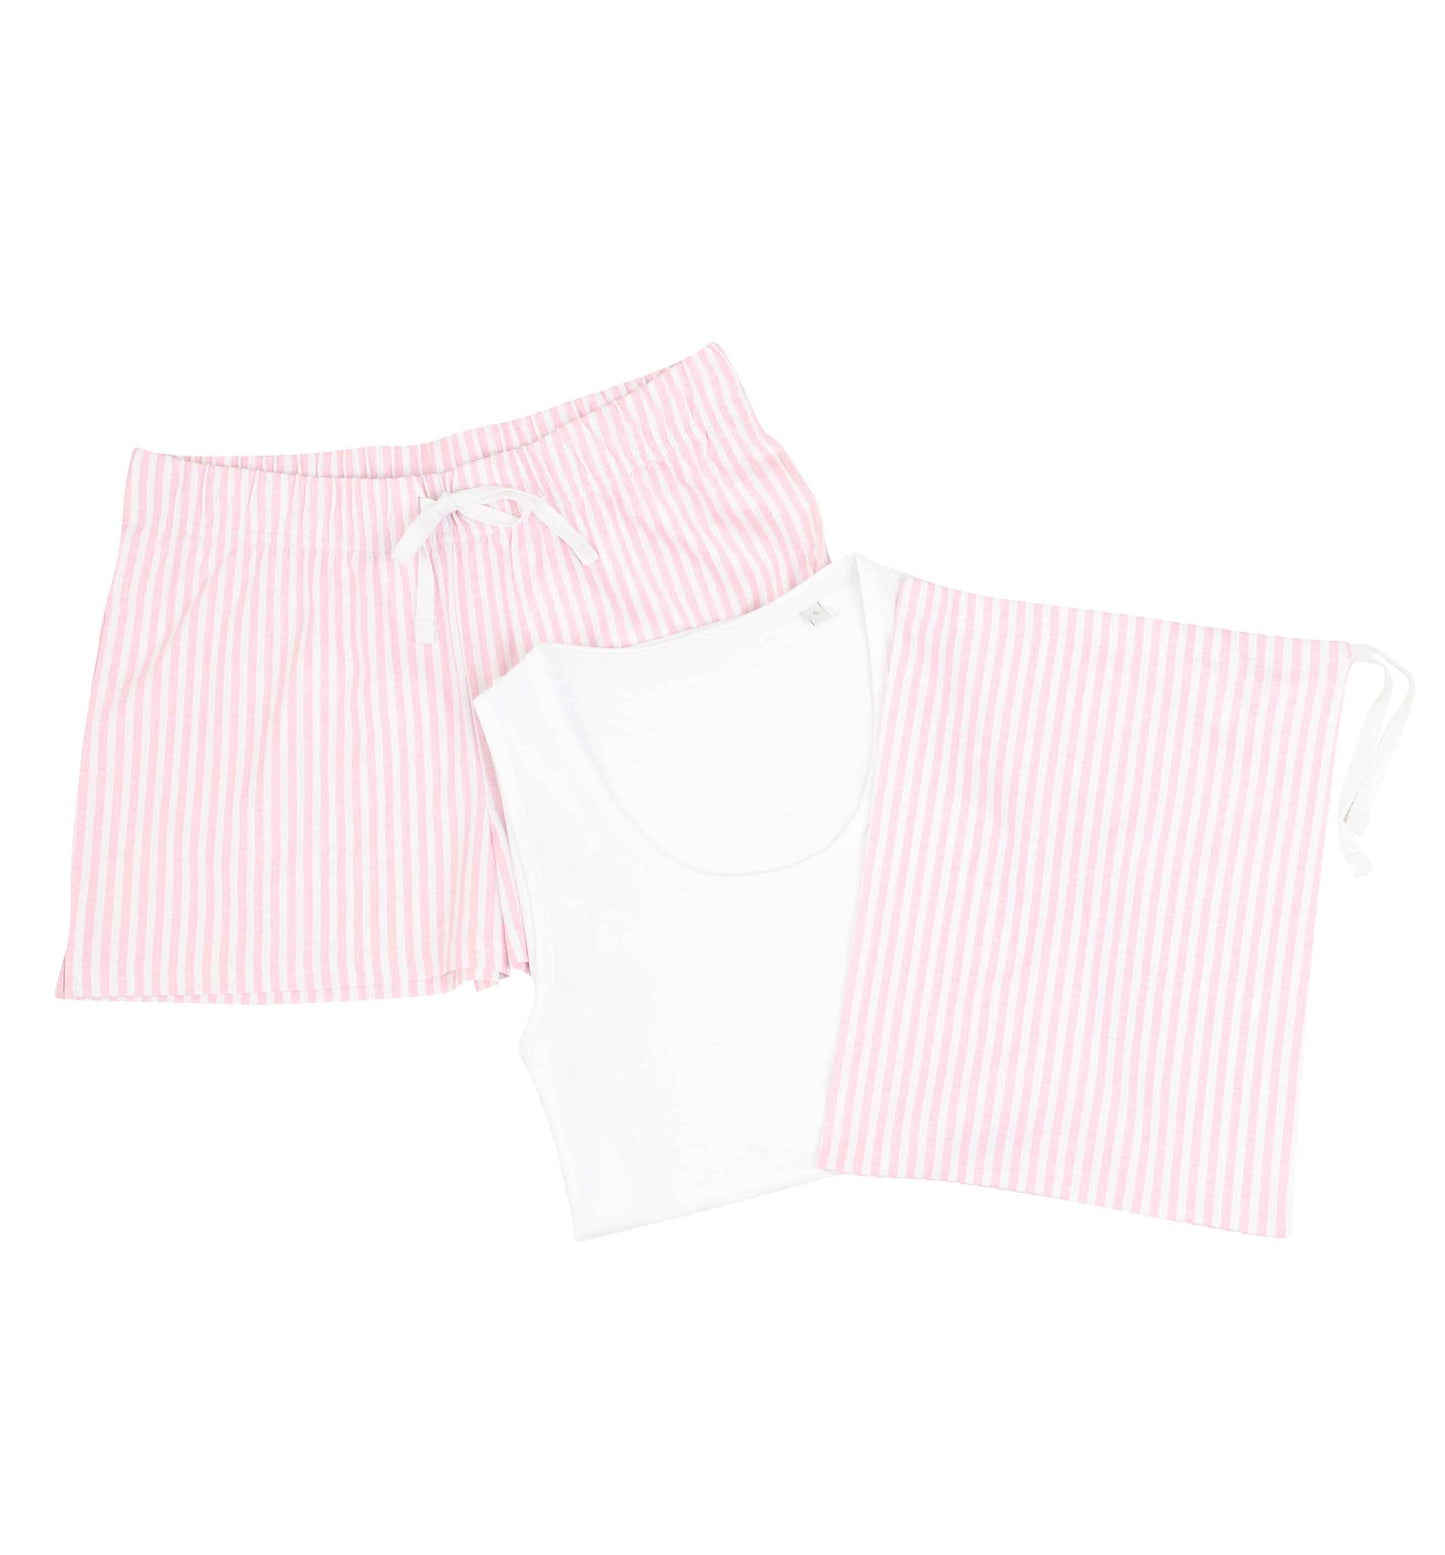 Willy straws and dirty dance floors | Pyjama shorts set